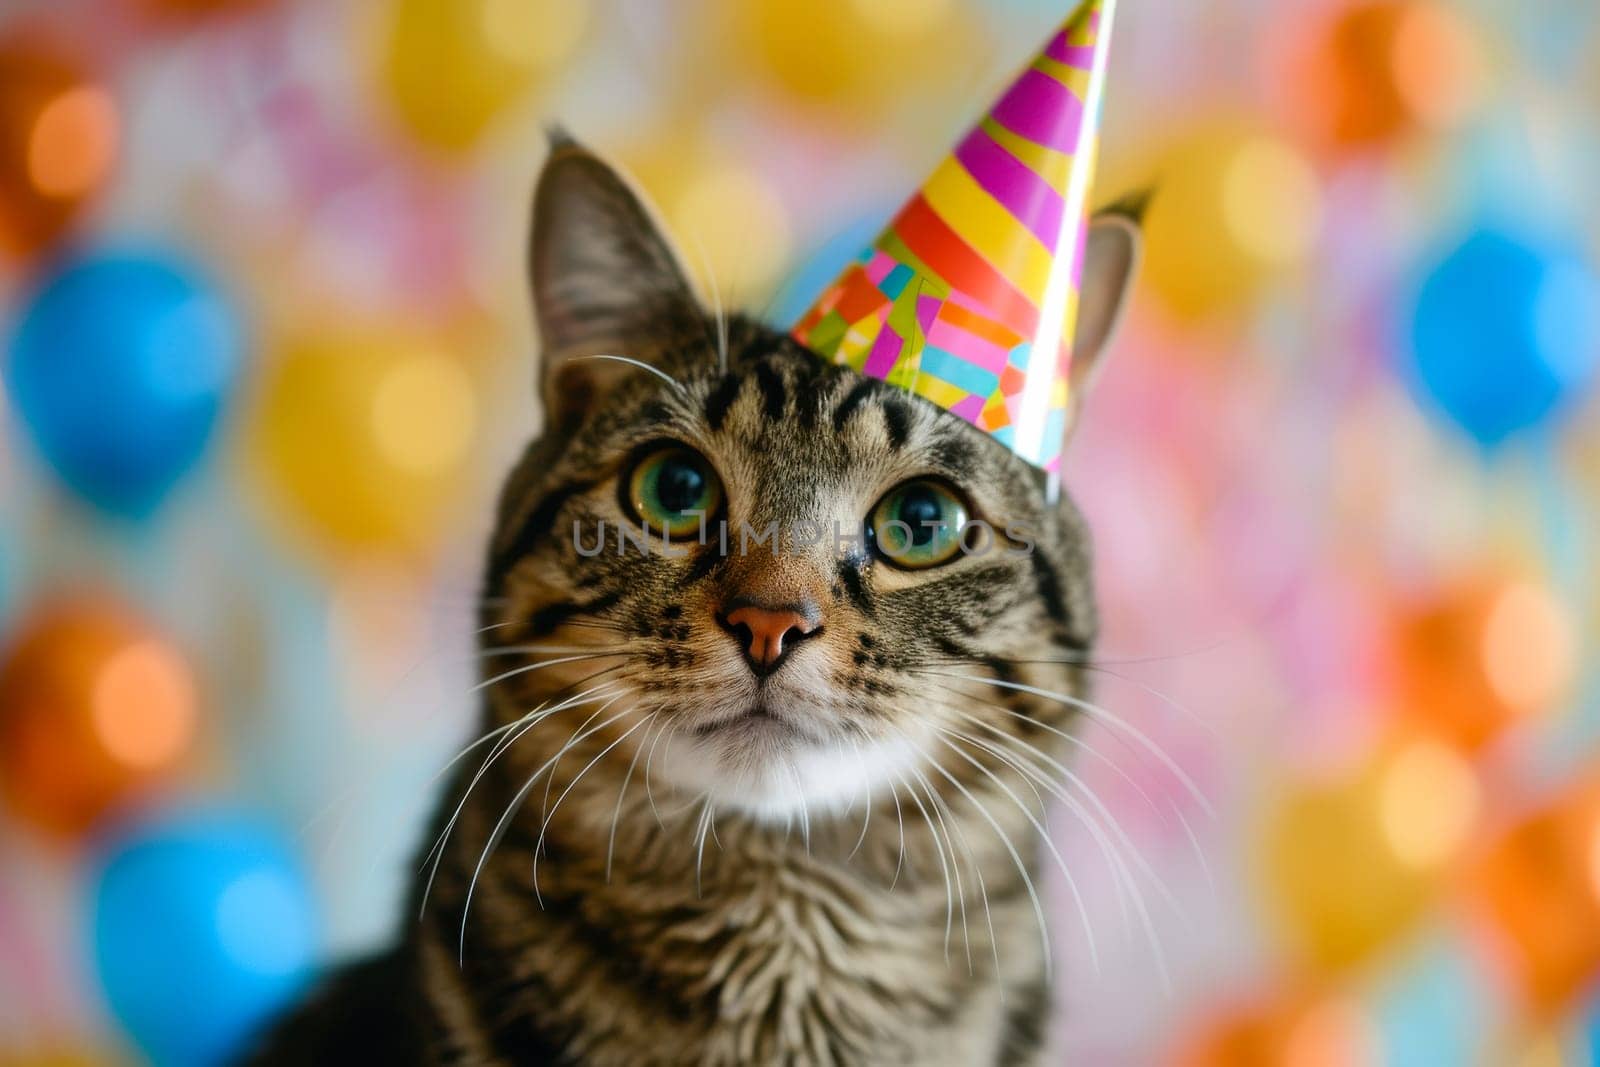 Cat Wearing Birthday Party Hat by vladimka